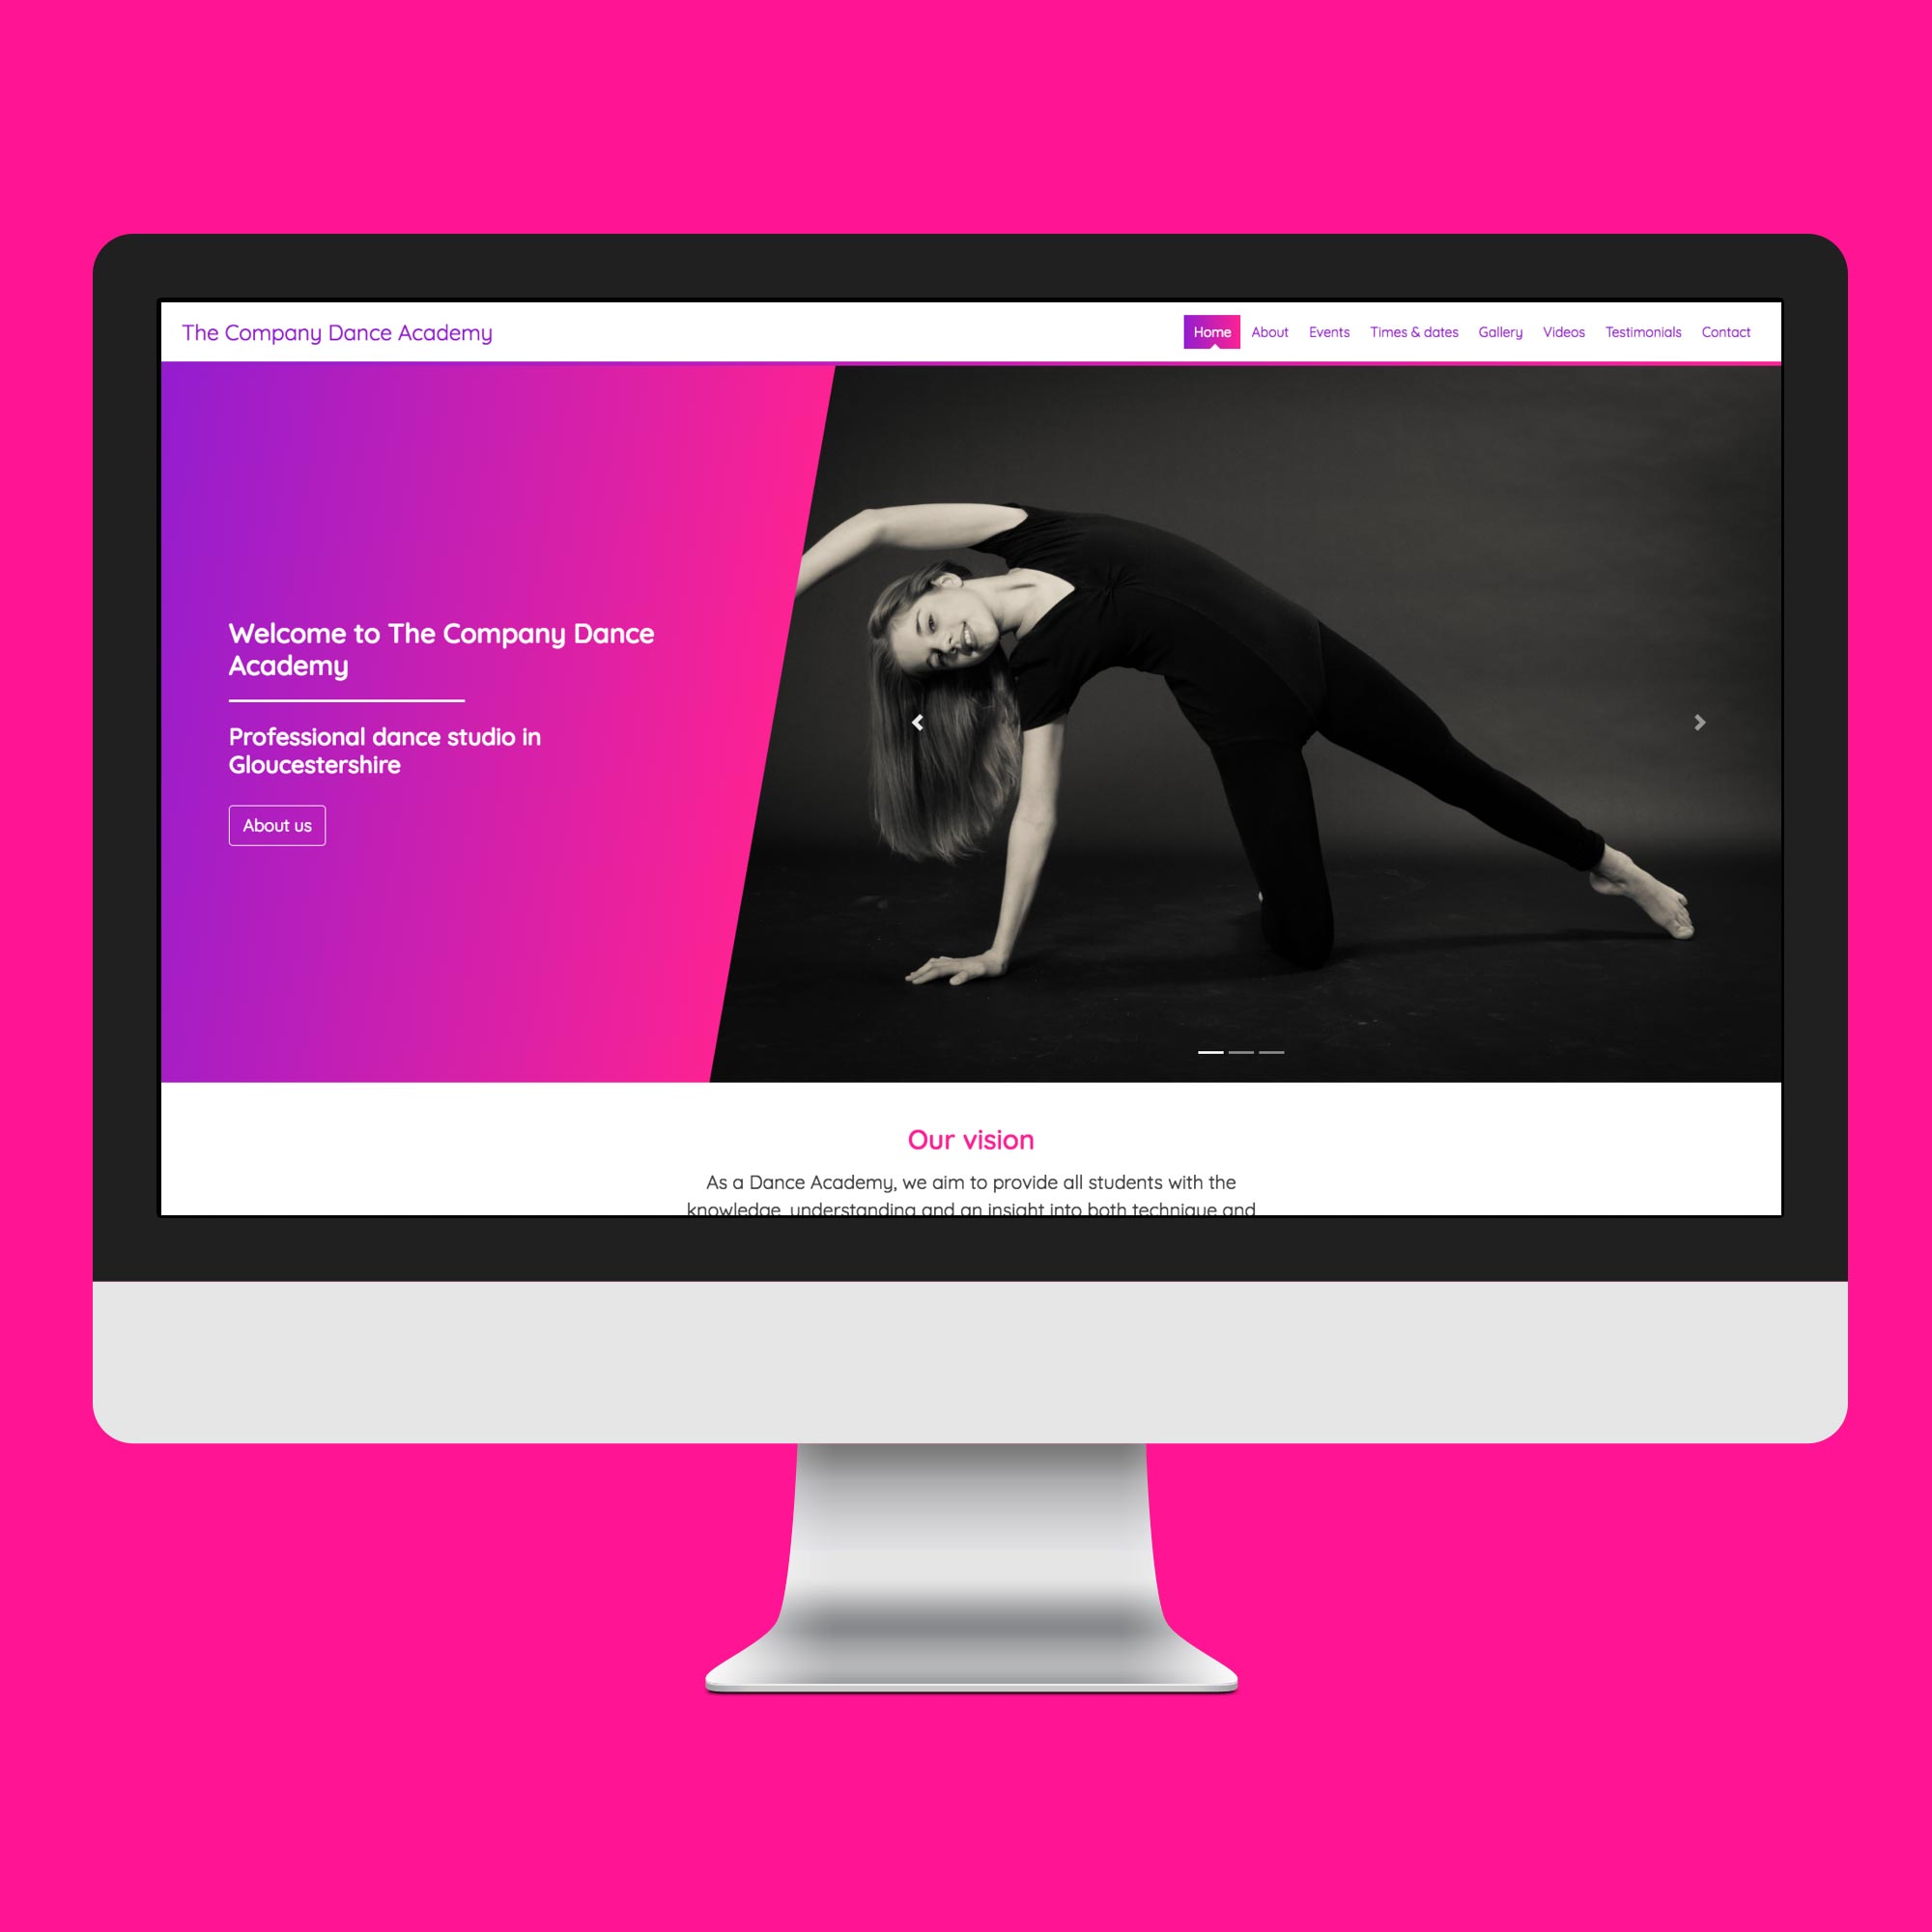 The Company Dance Academy website